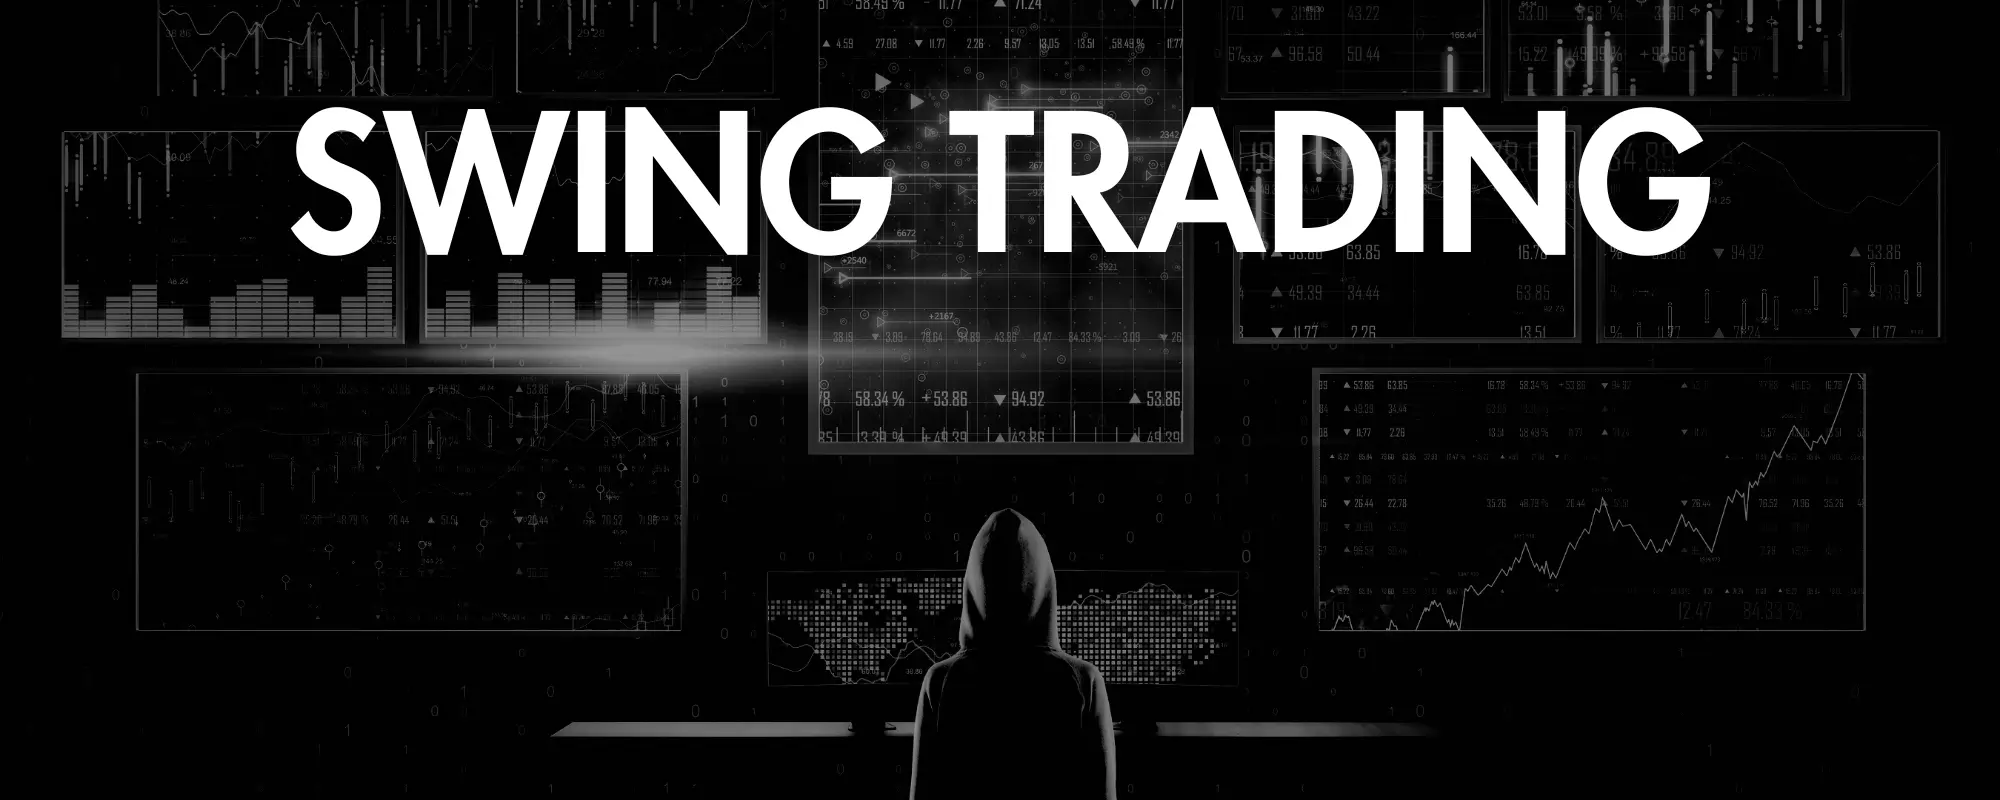 Swing Trading für Anfänger Guide